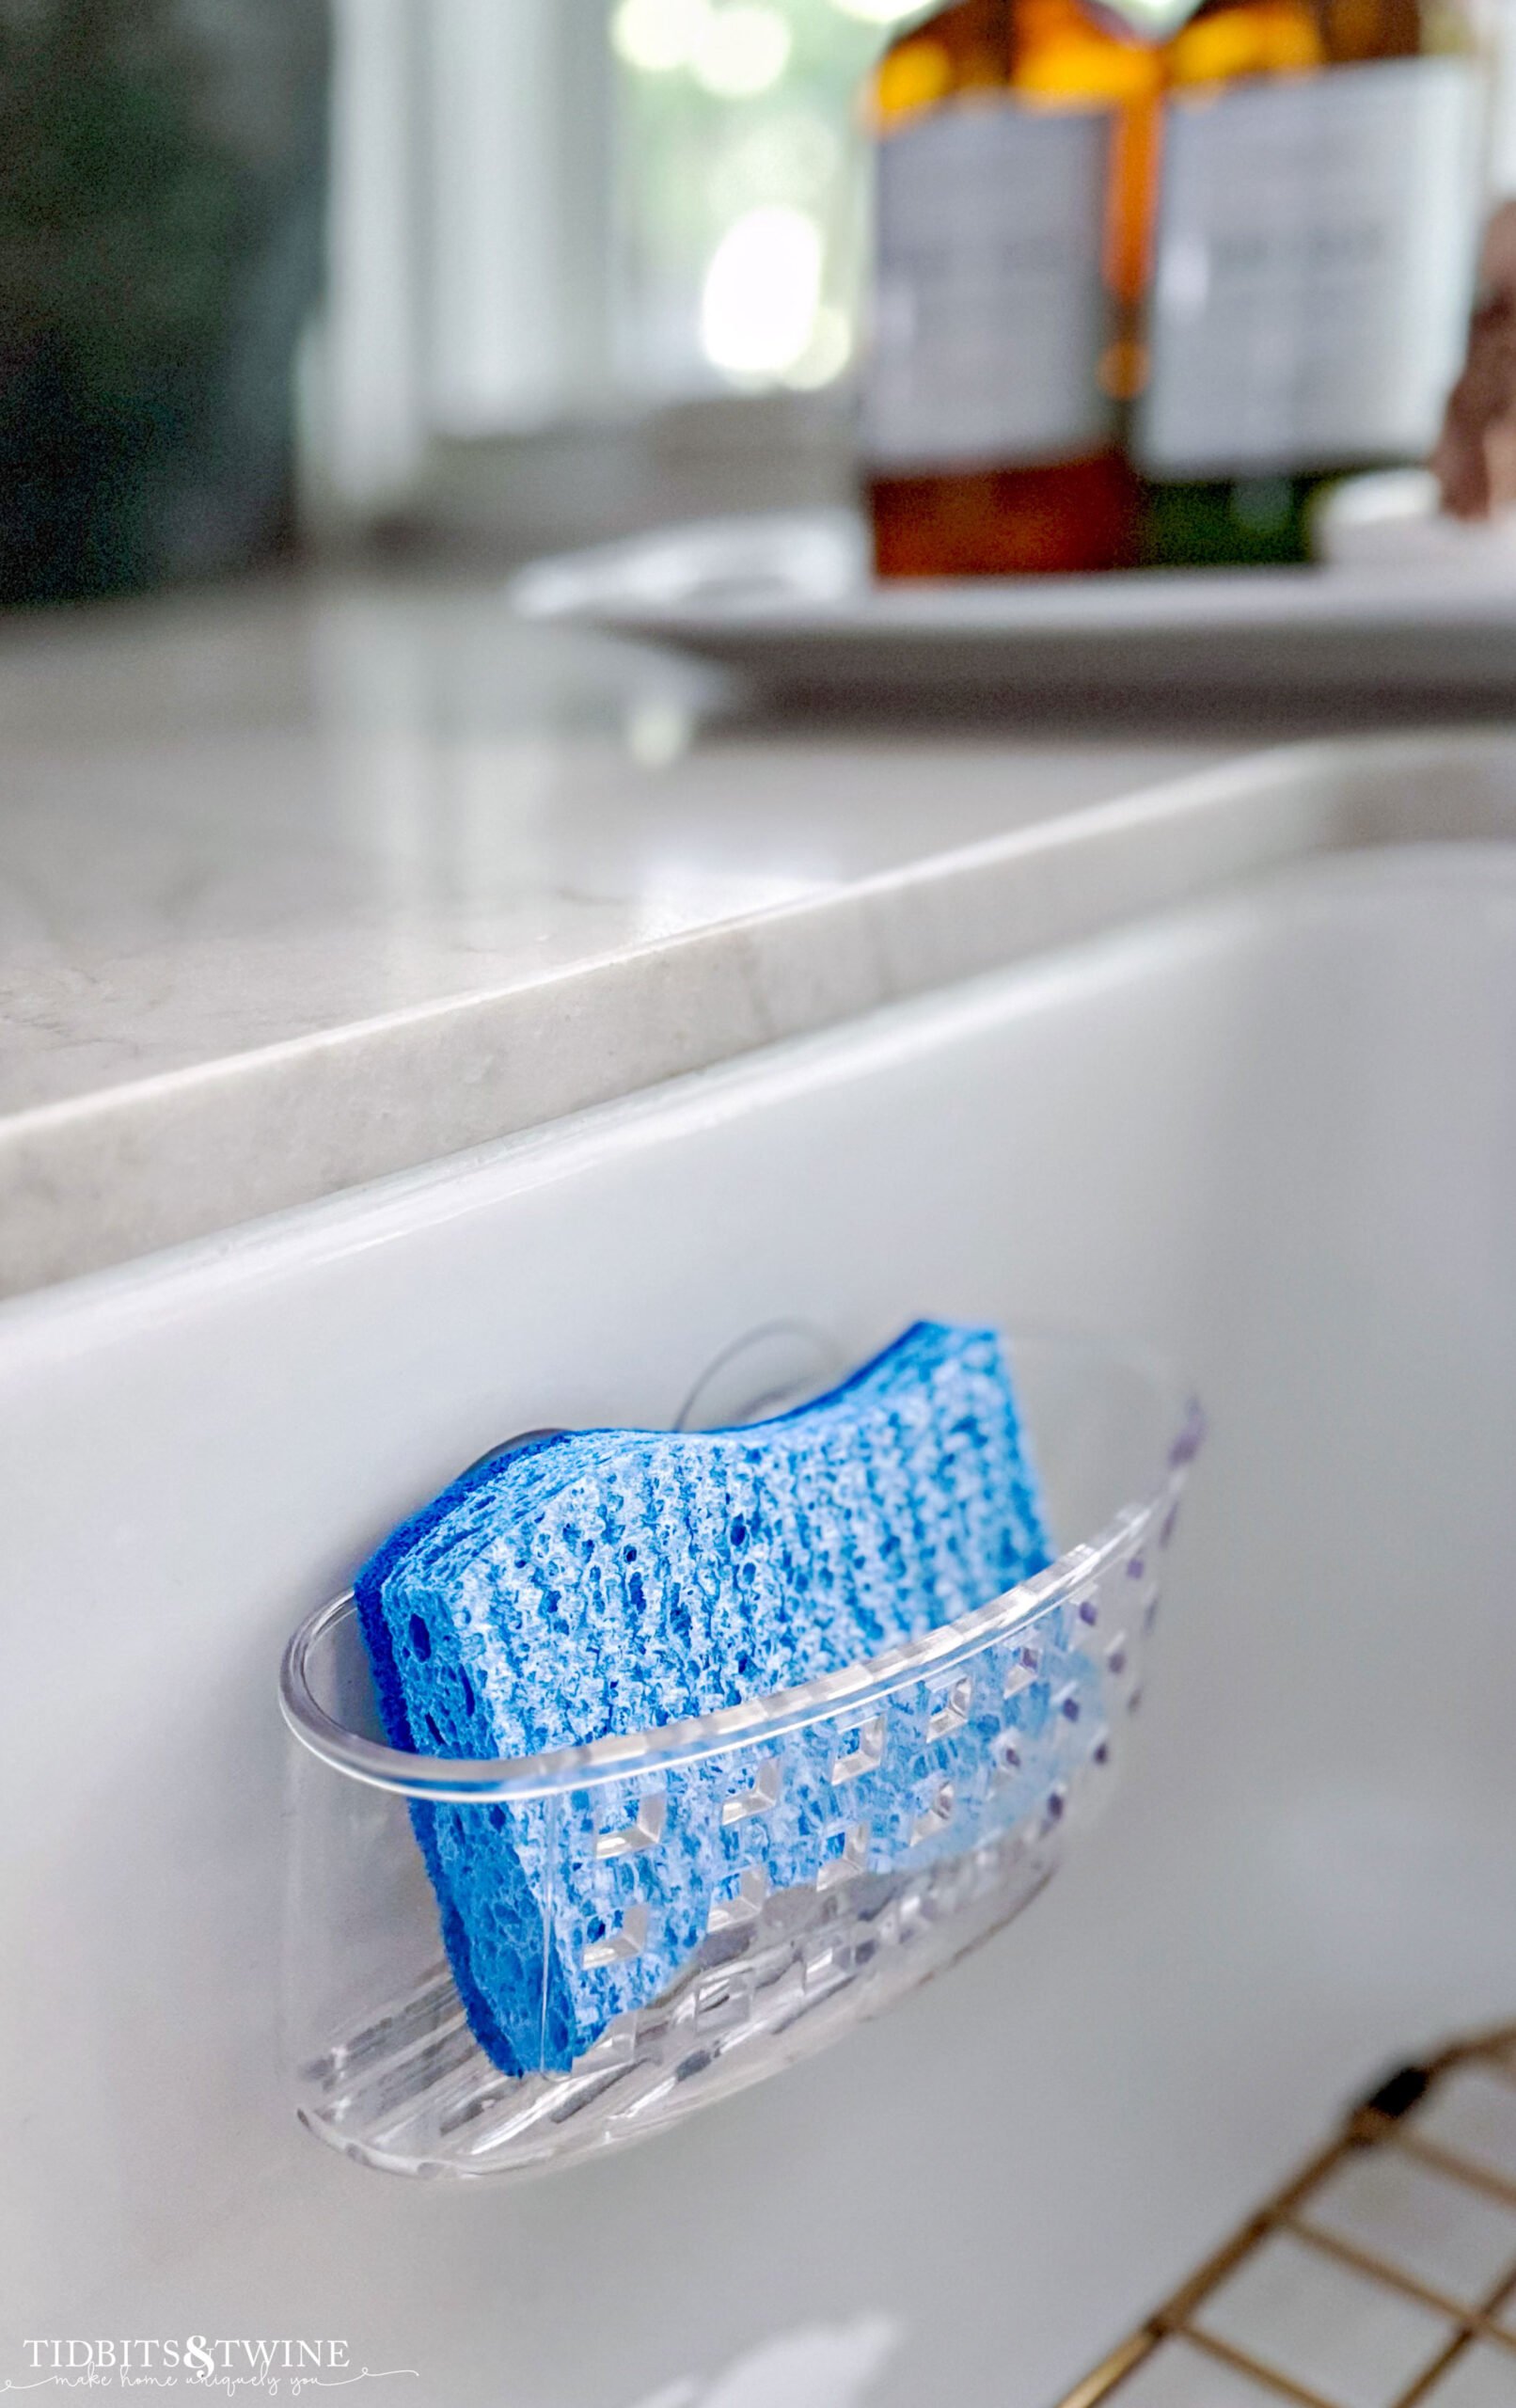 clear plastic sponge holder on side of white kitchen sink holding blue sponge